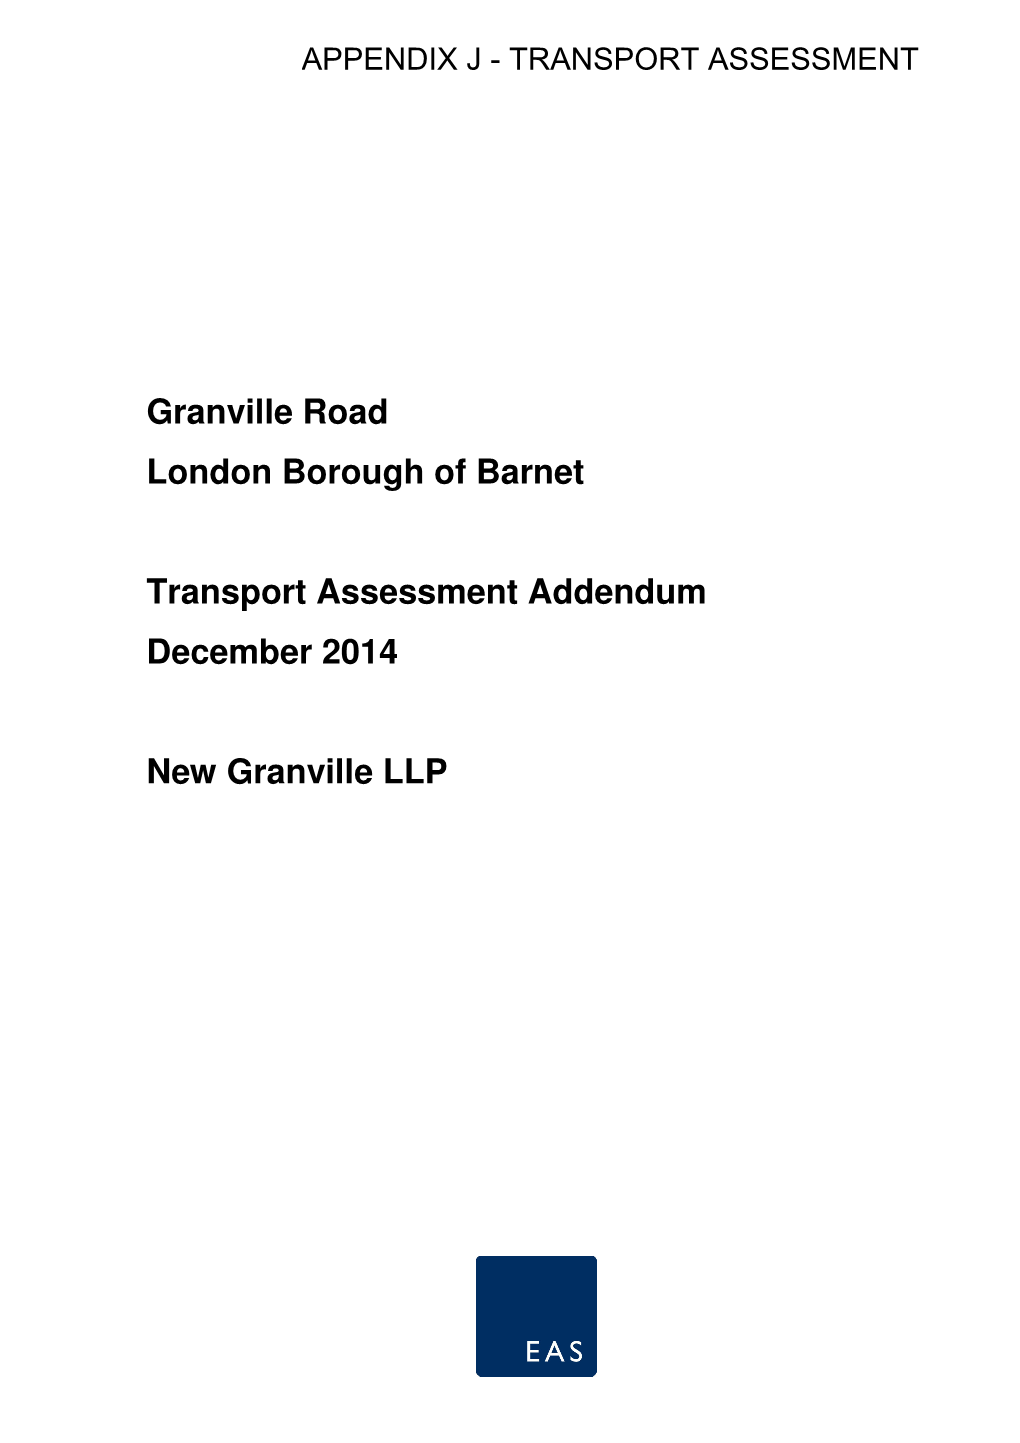 Transport Assessment Addendum December 2014